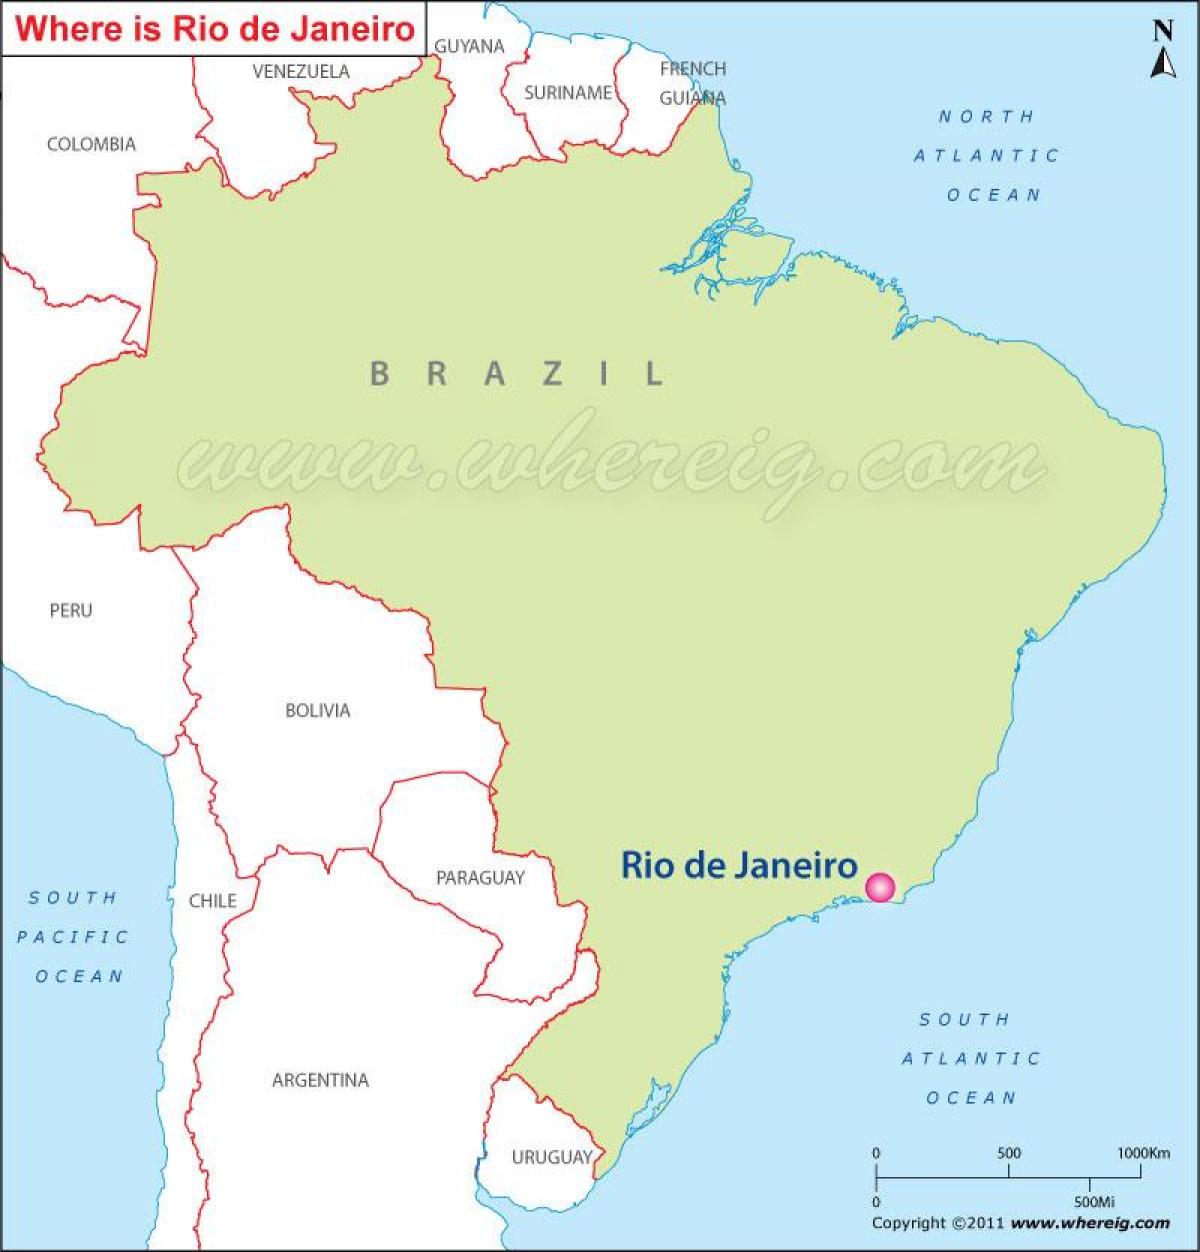 Mapa Rio de Janeiro w Brazylii